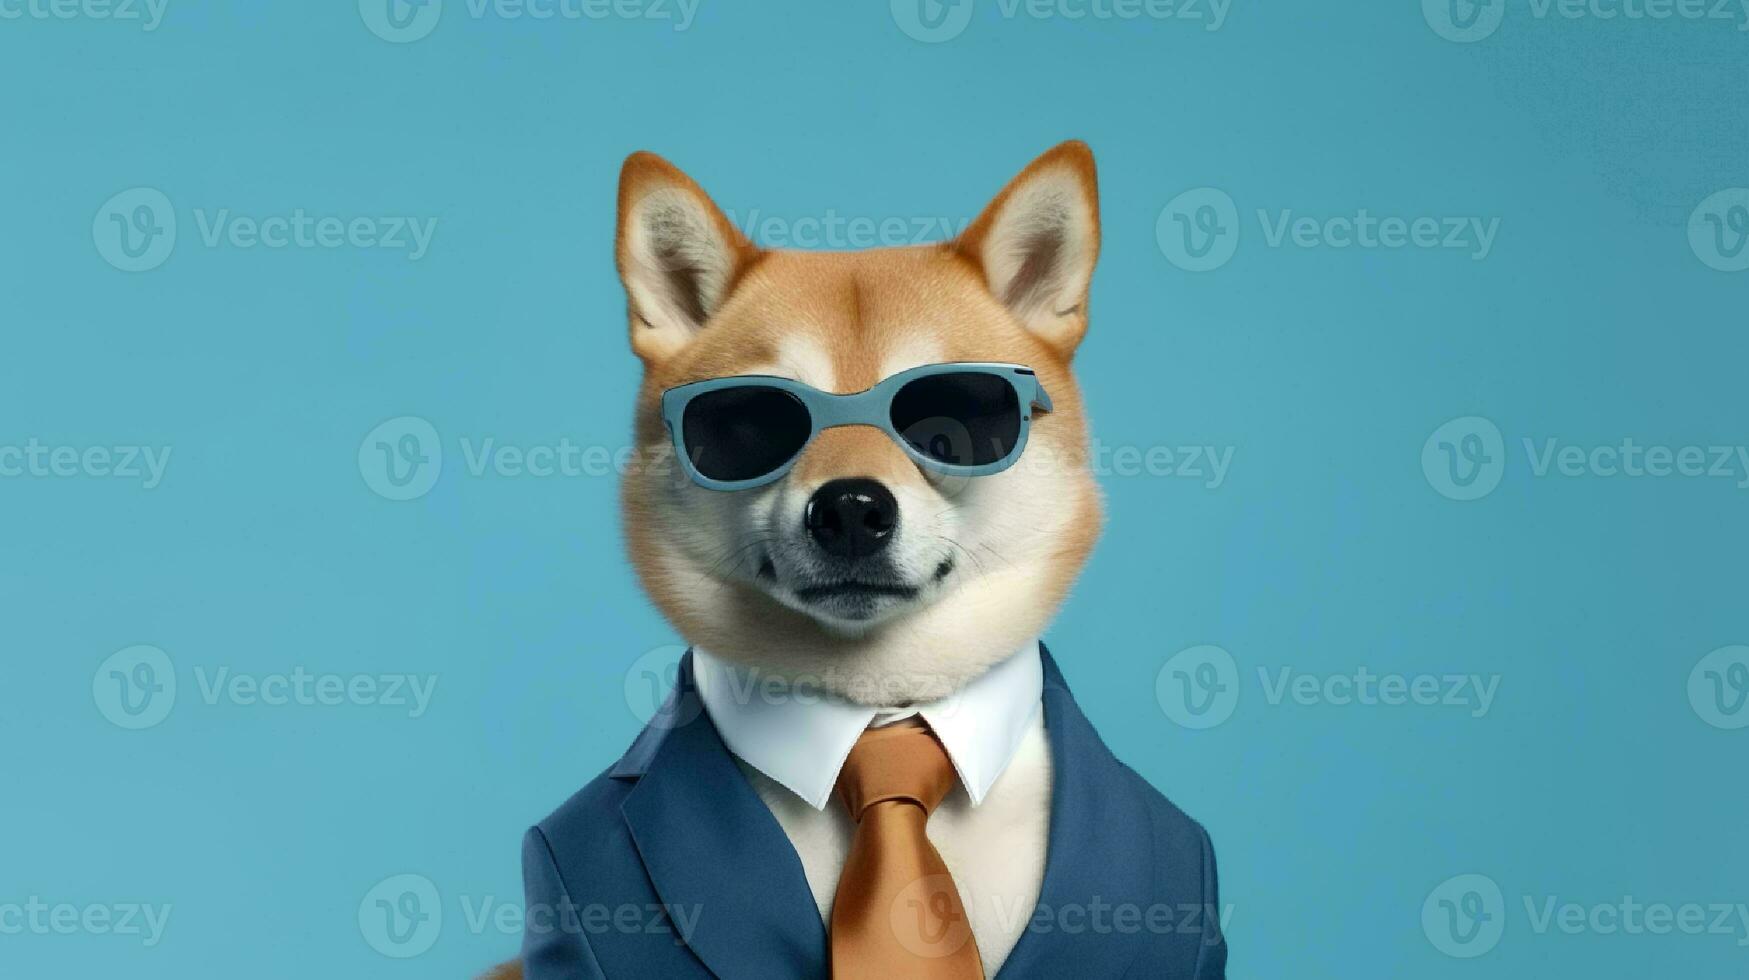 foto van hooghartig shiba inu hond gebruik makend van bril en kantoor pak Aan wit achtergrond. generatief ai